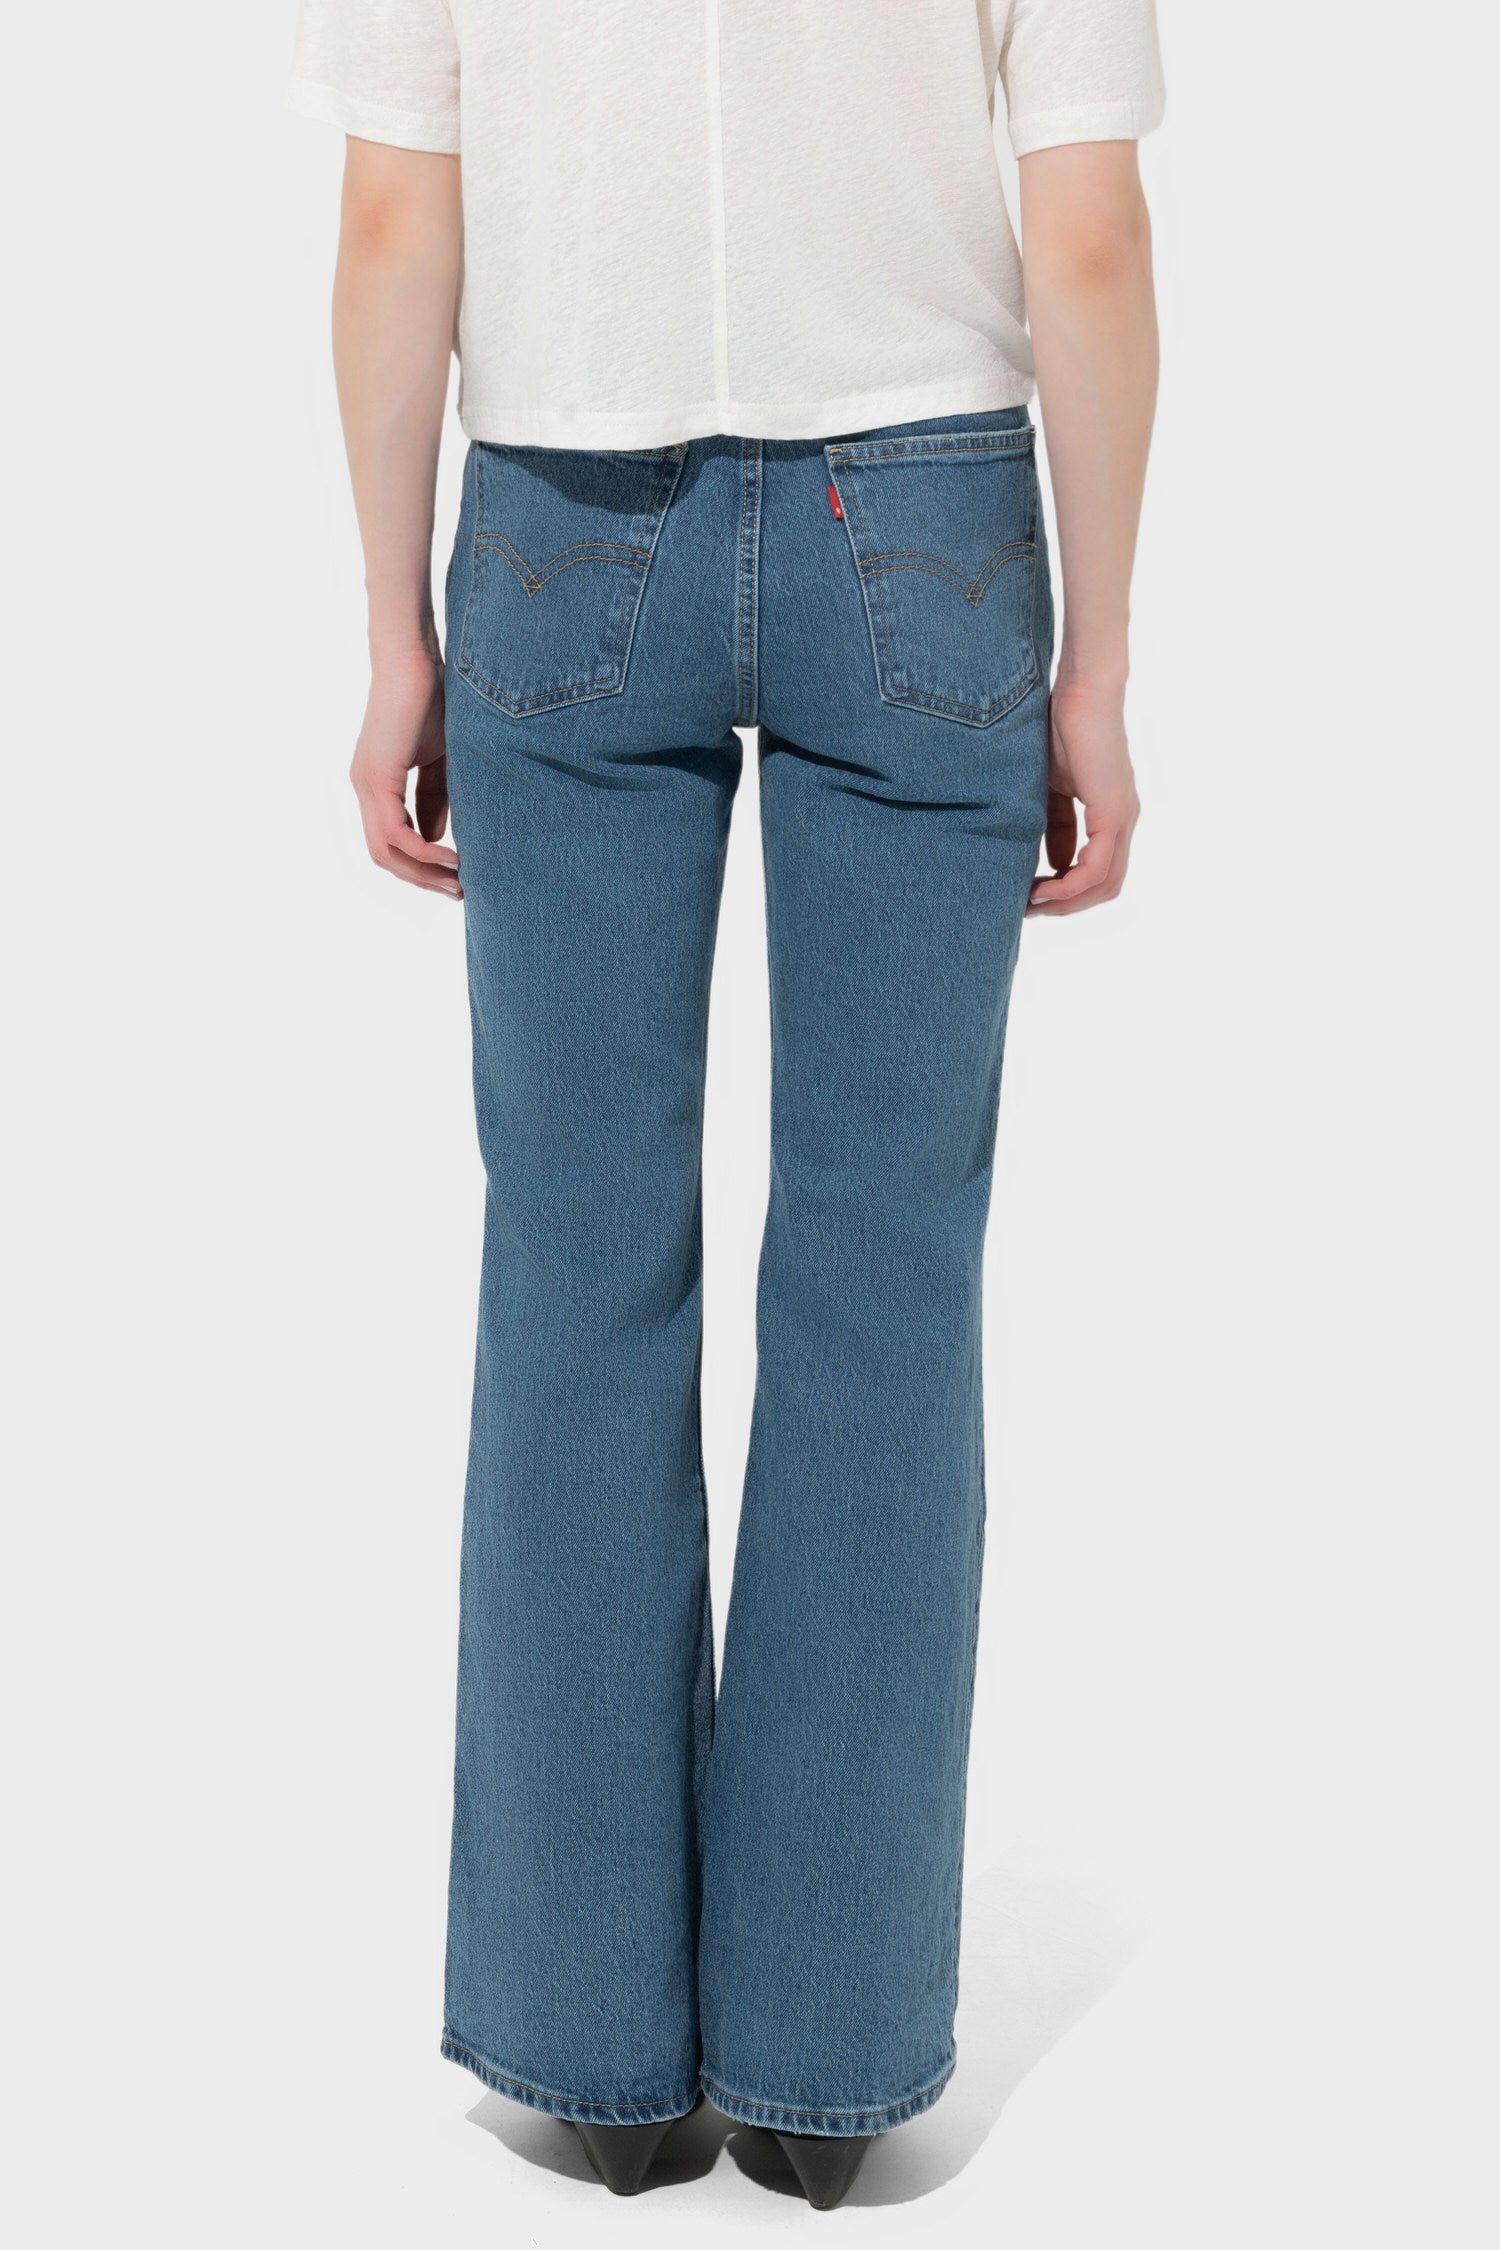 Buy Levi's Womens 70s High Flare Jeans Sonoma Walks